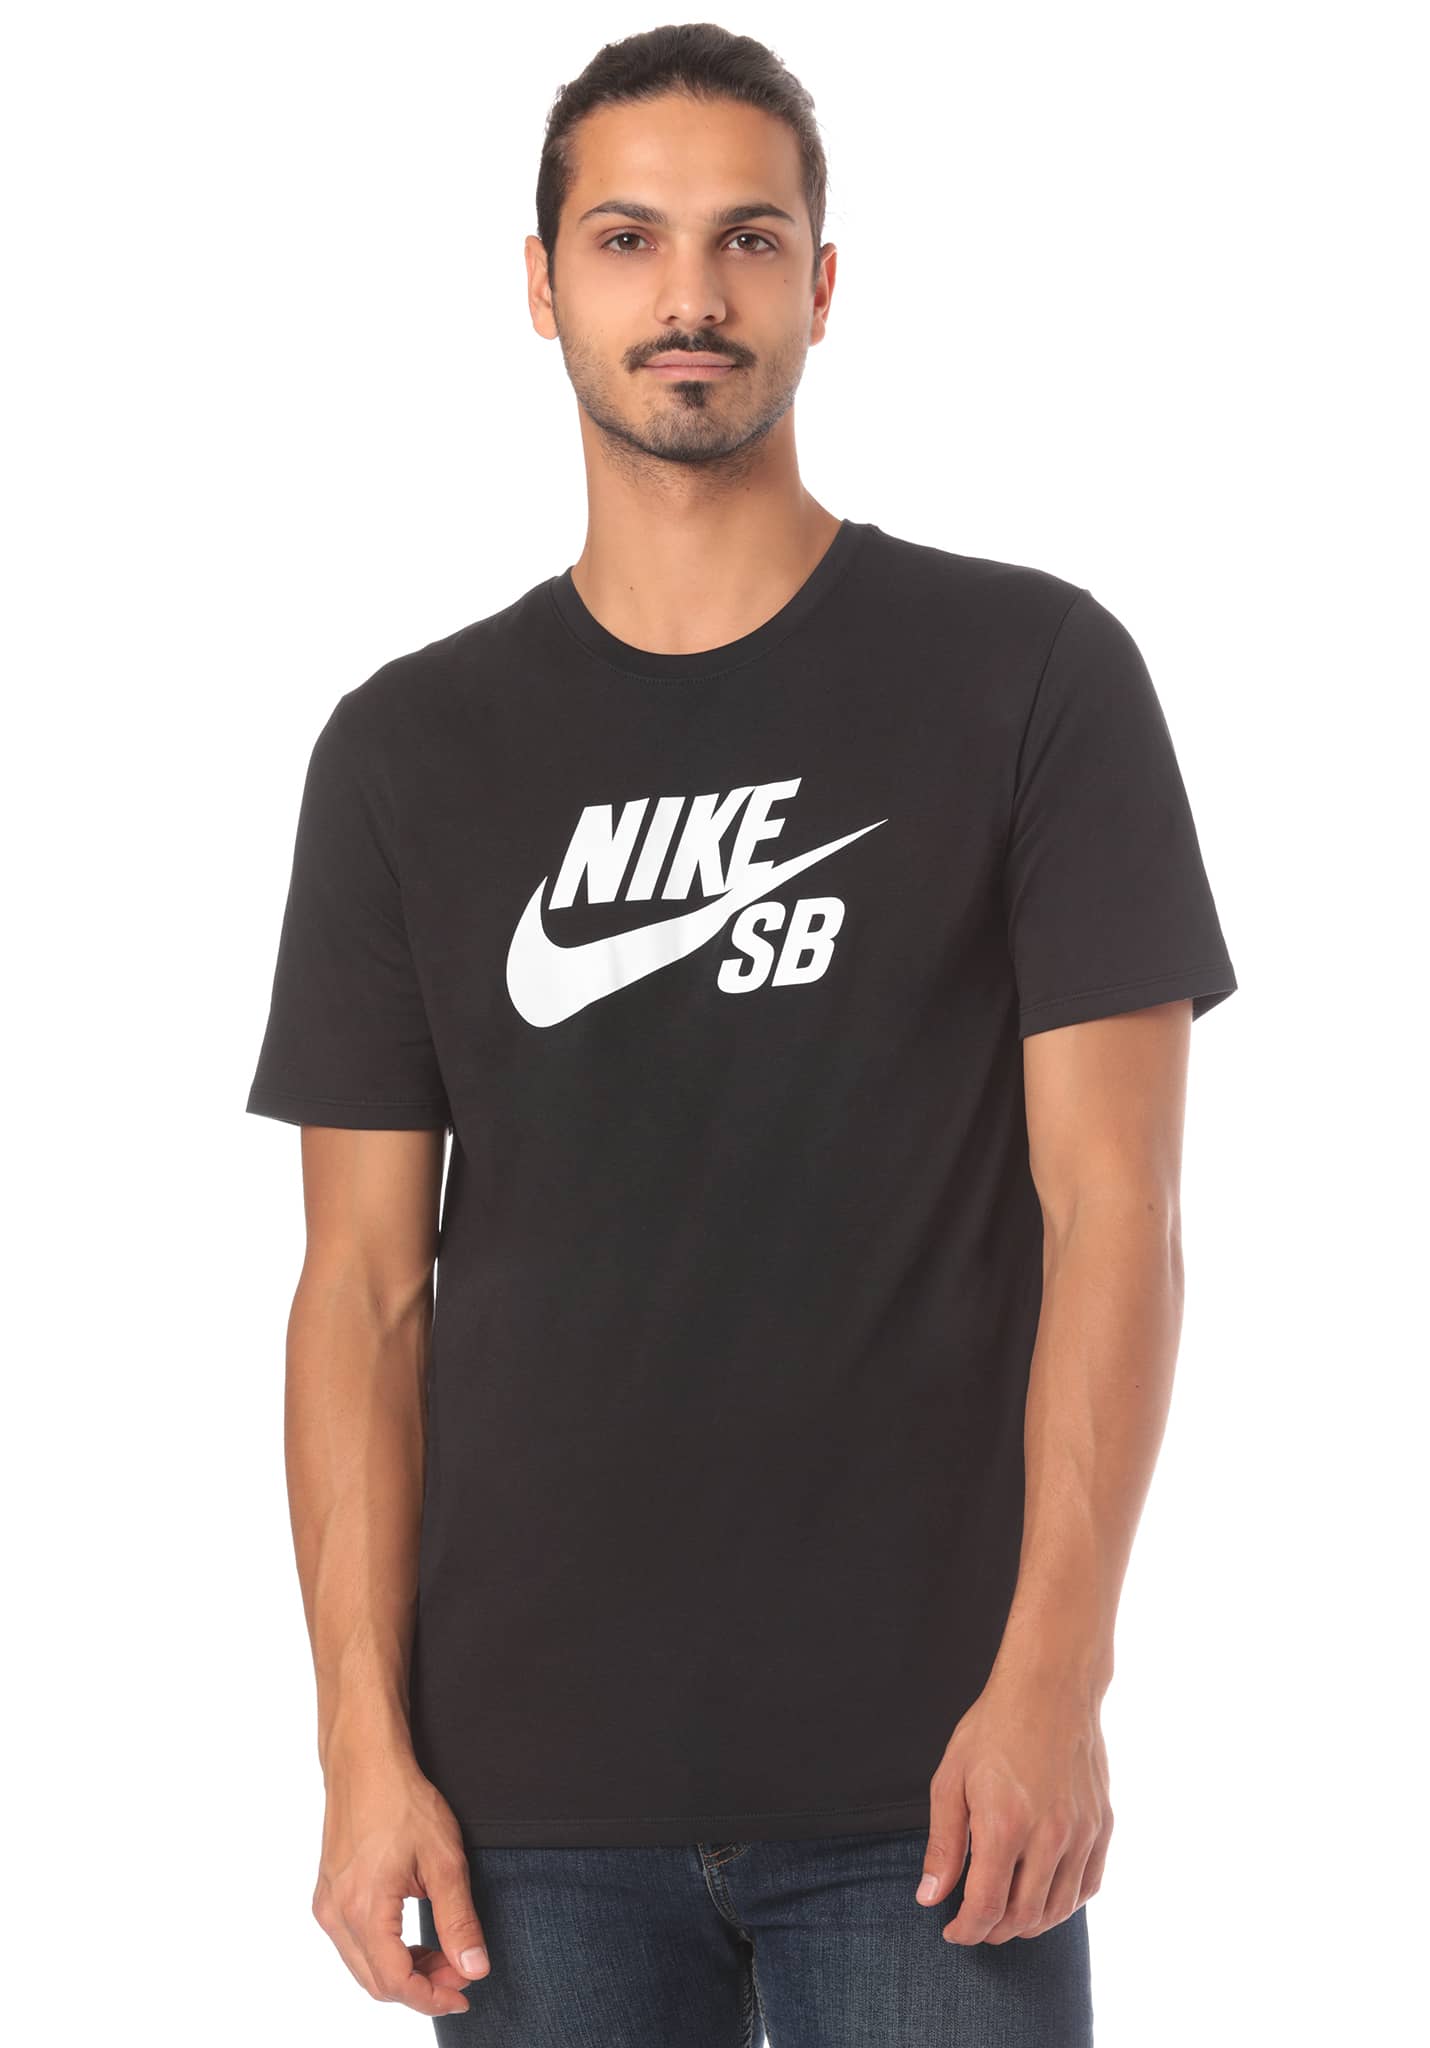 Nike Snowboarding Logo T-Shirt white-black L